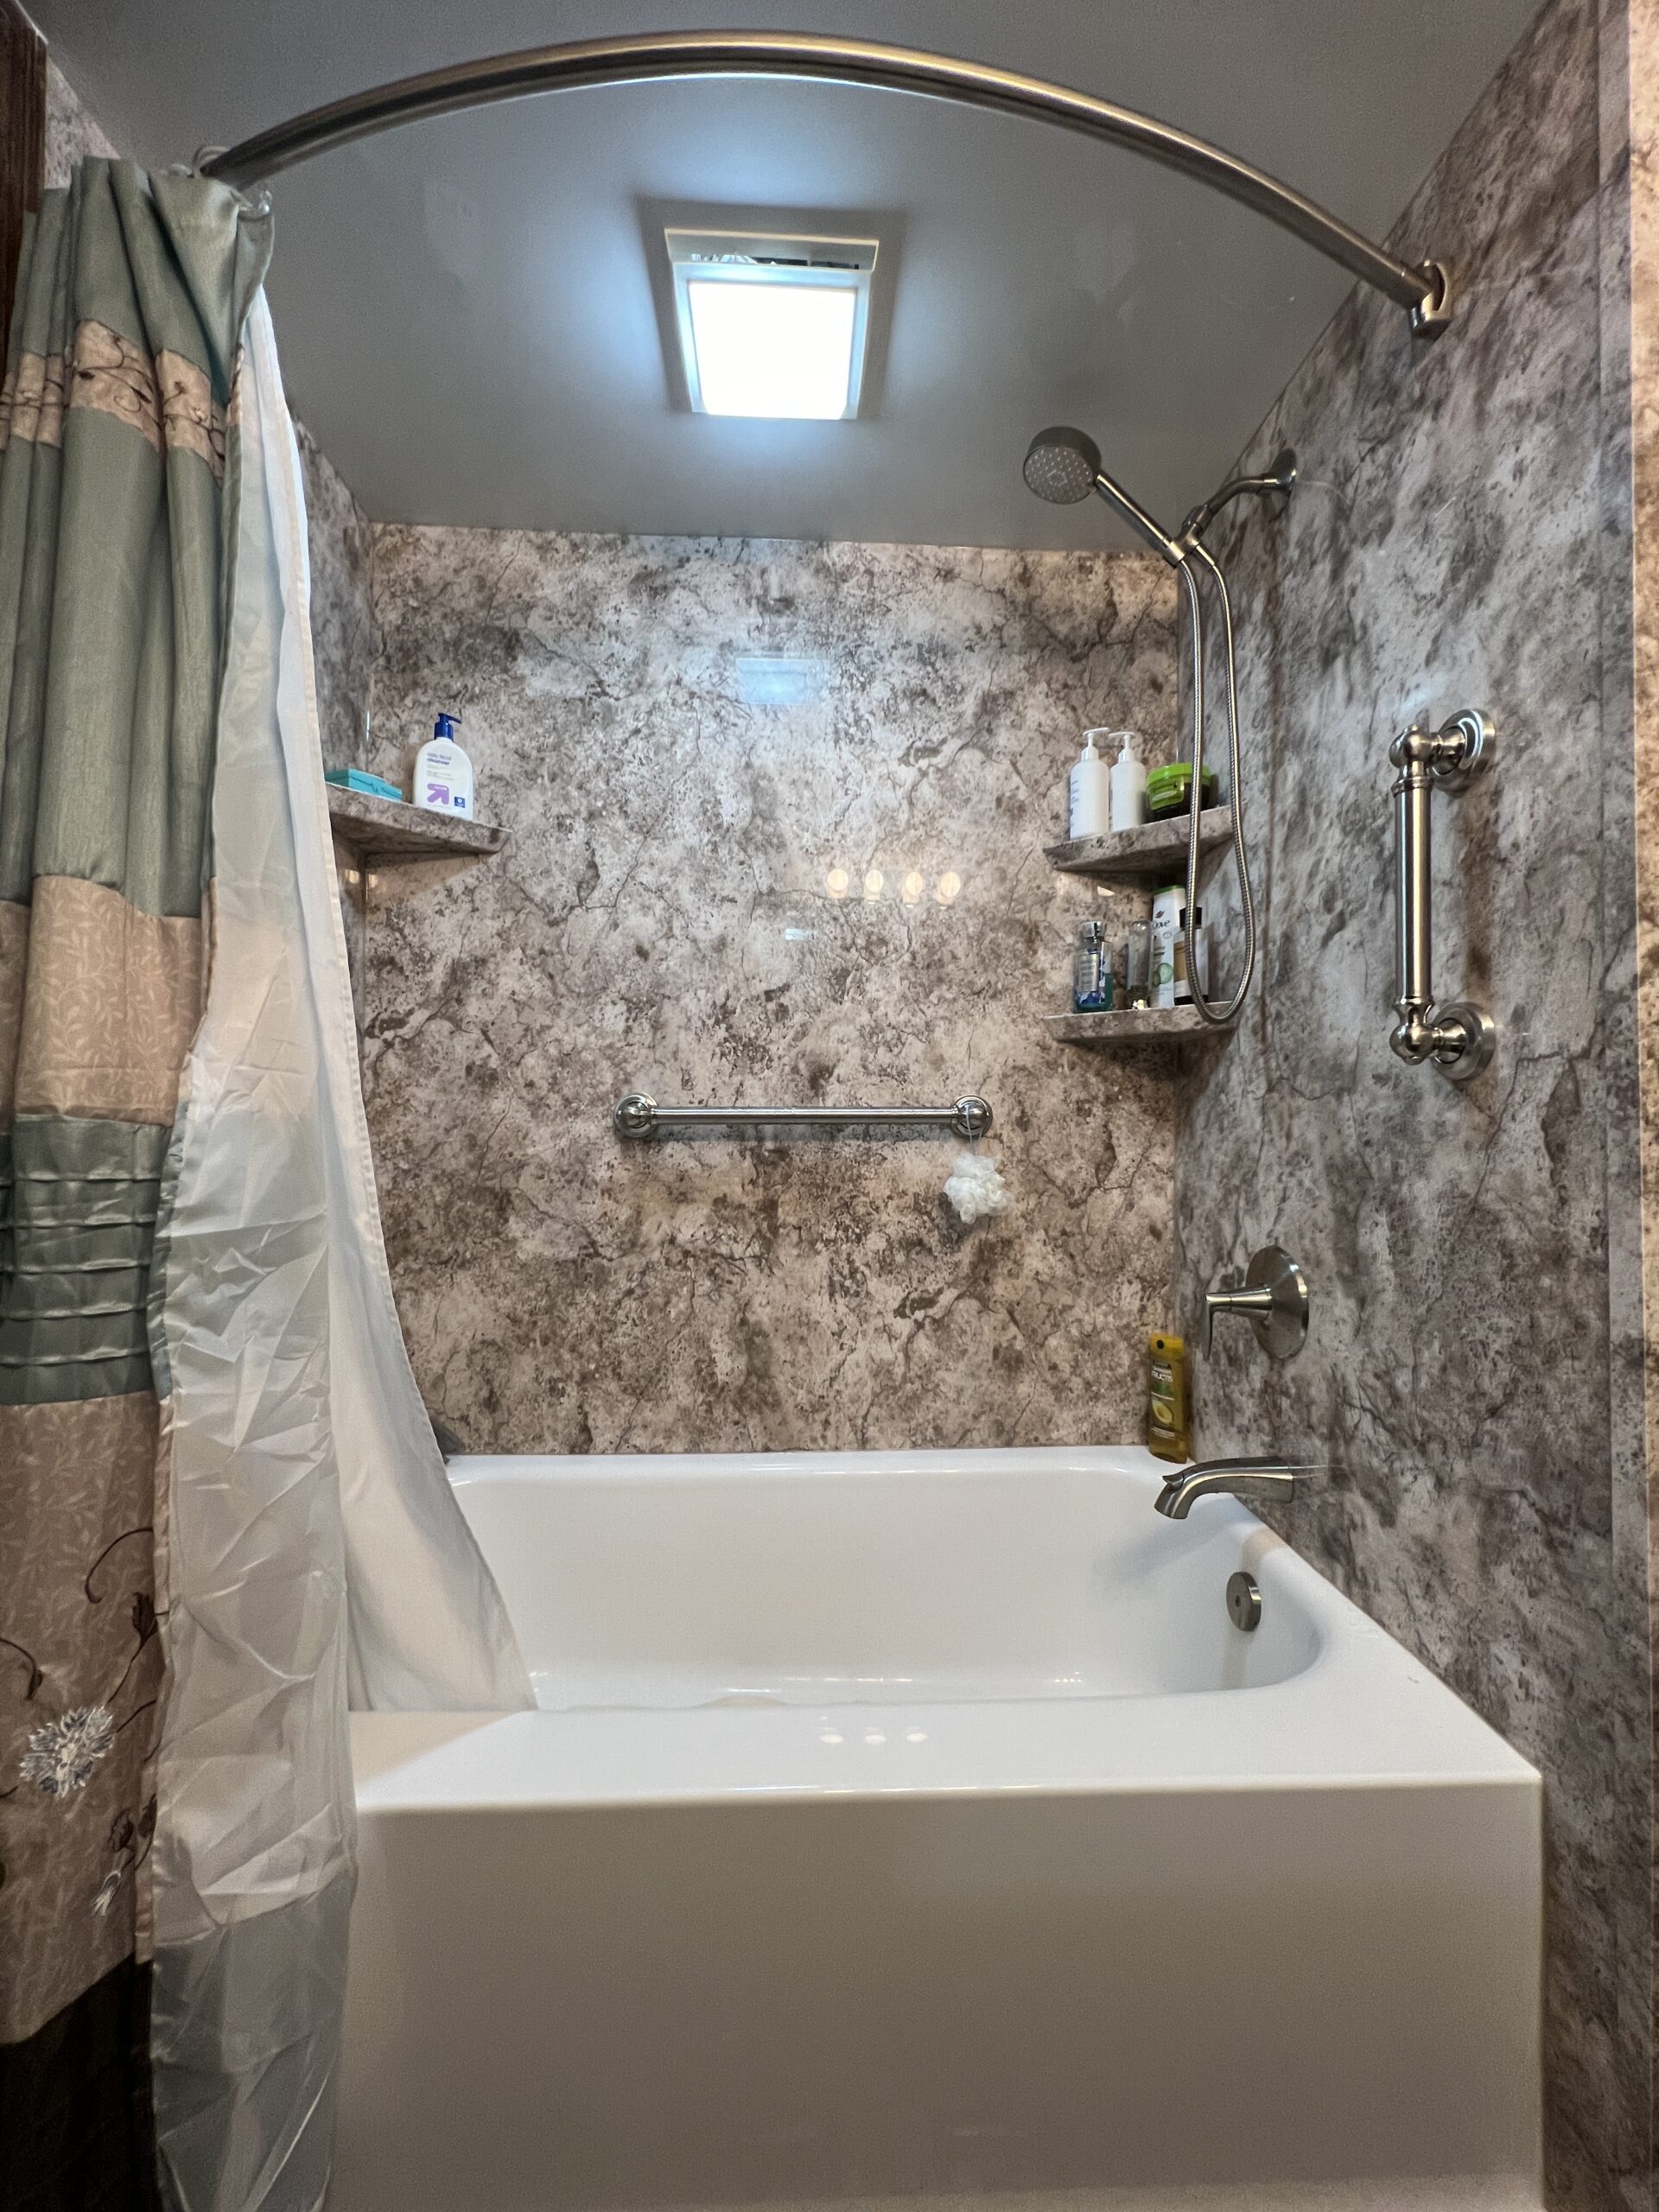 New bathtub remodel with granite look surround